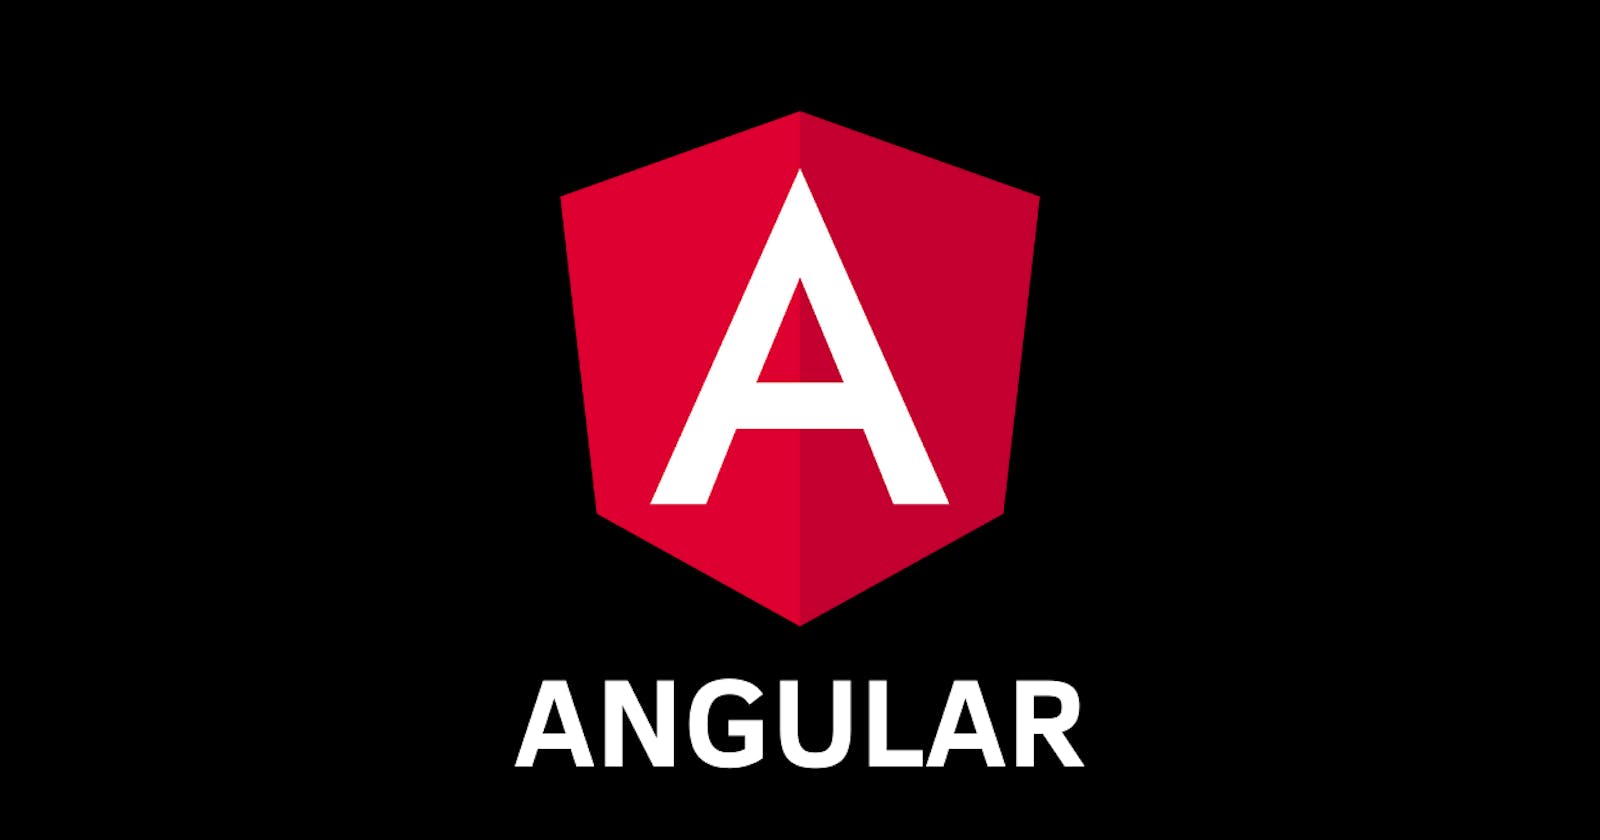 Angular: Working with FormData